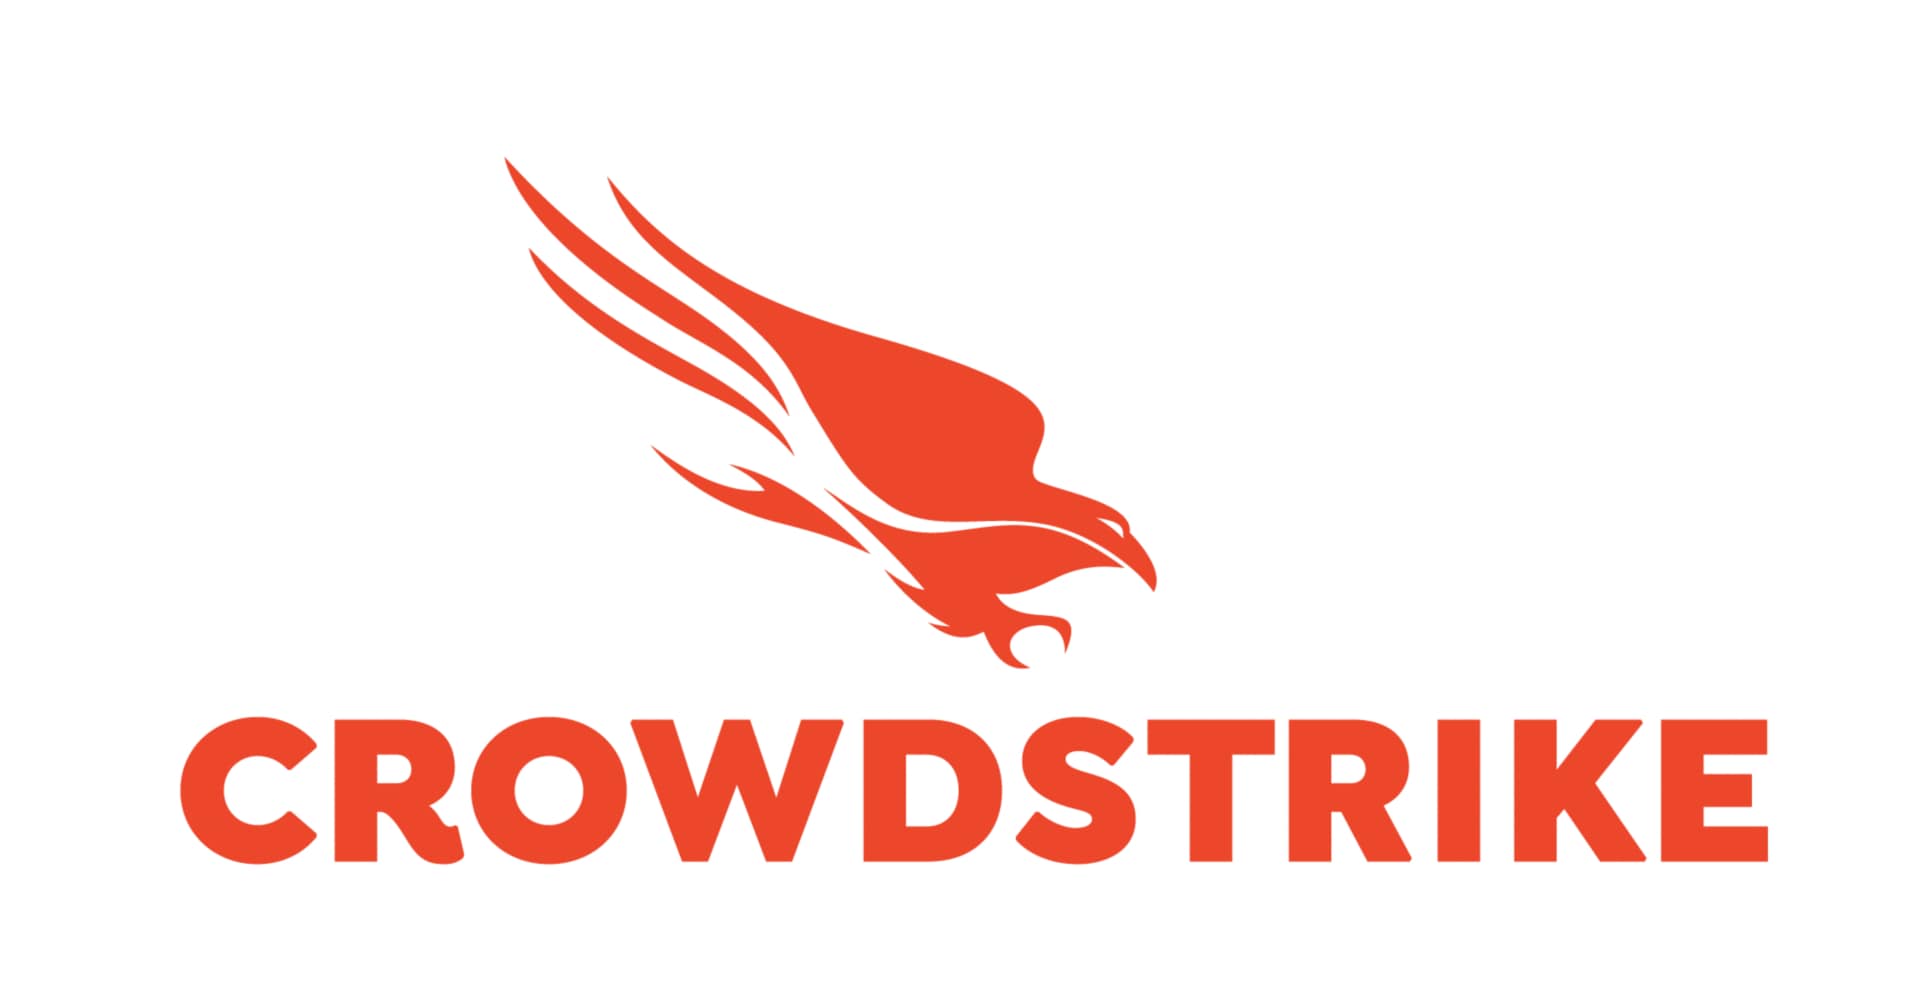 CrowdStrike 12-Month Server Threat Graph Standard on GovCloud Software